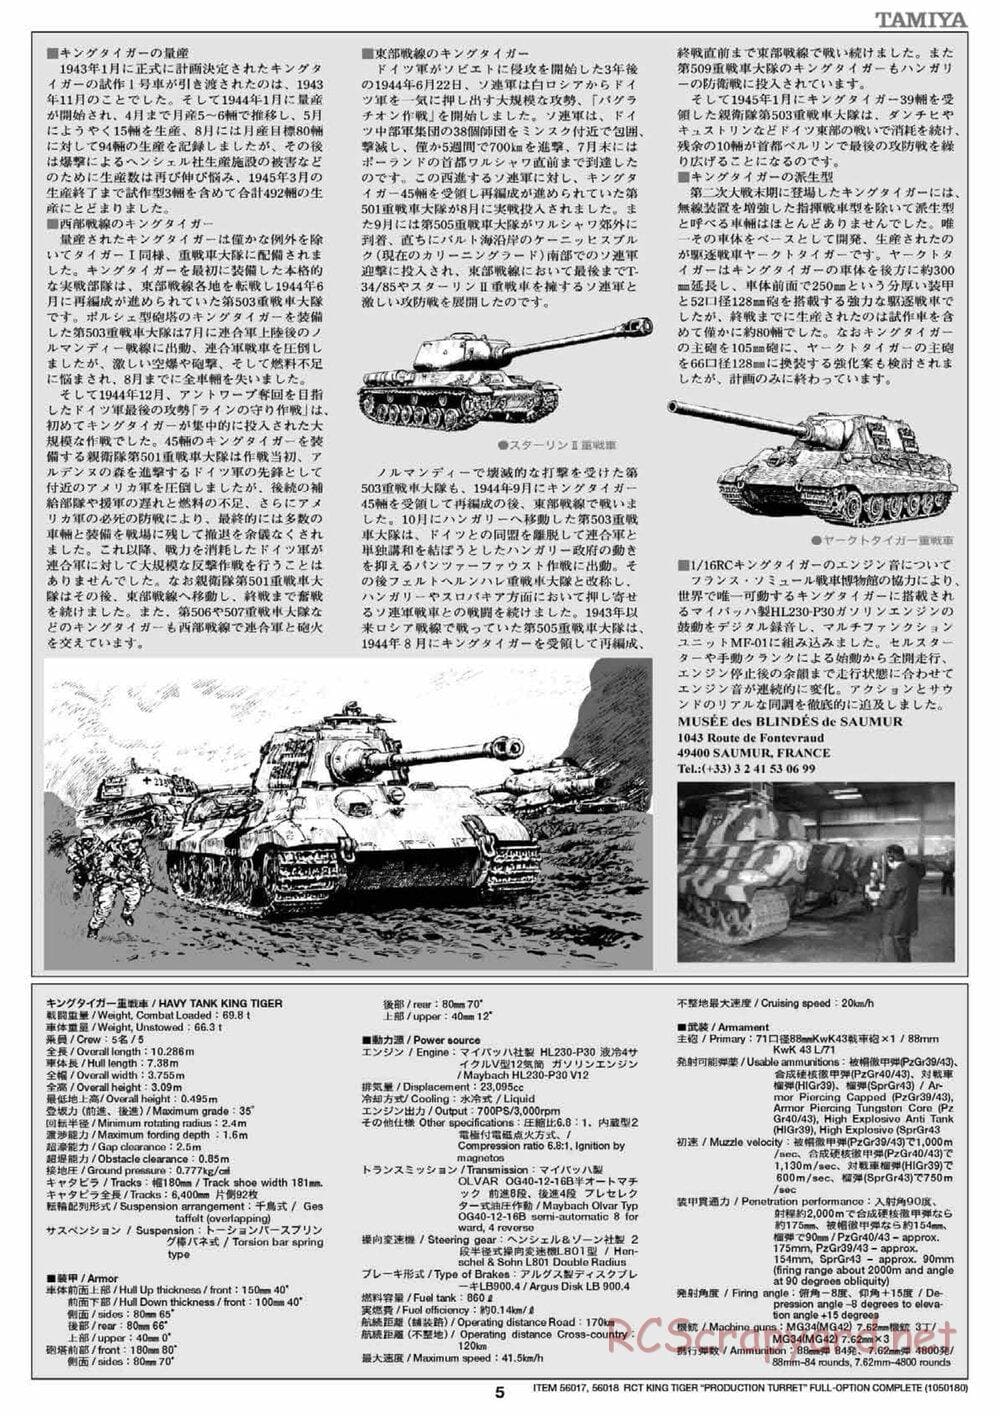 Tamiya - King Tiger - 1/16 Scale Chassis - Manual - Page 5